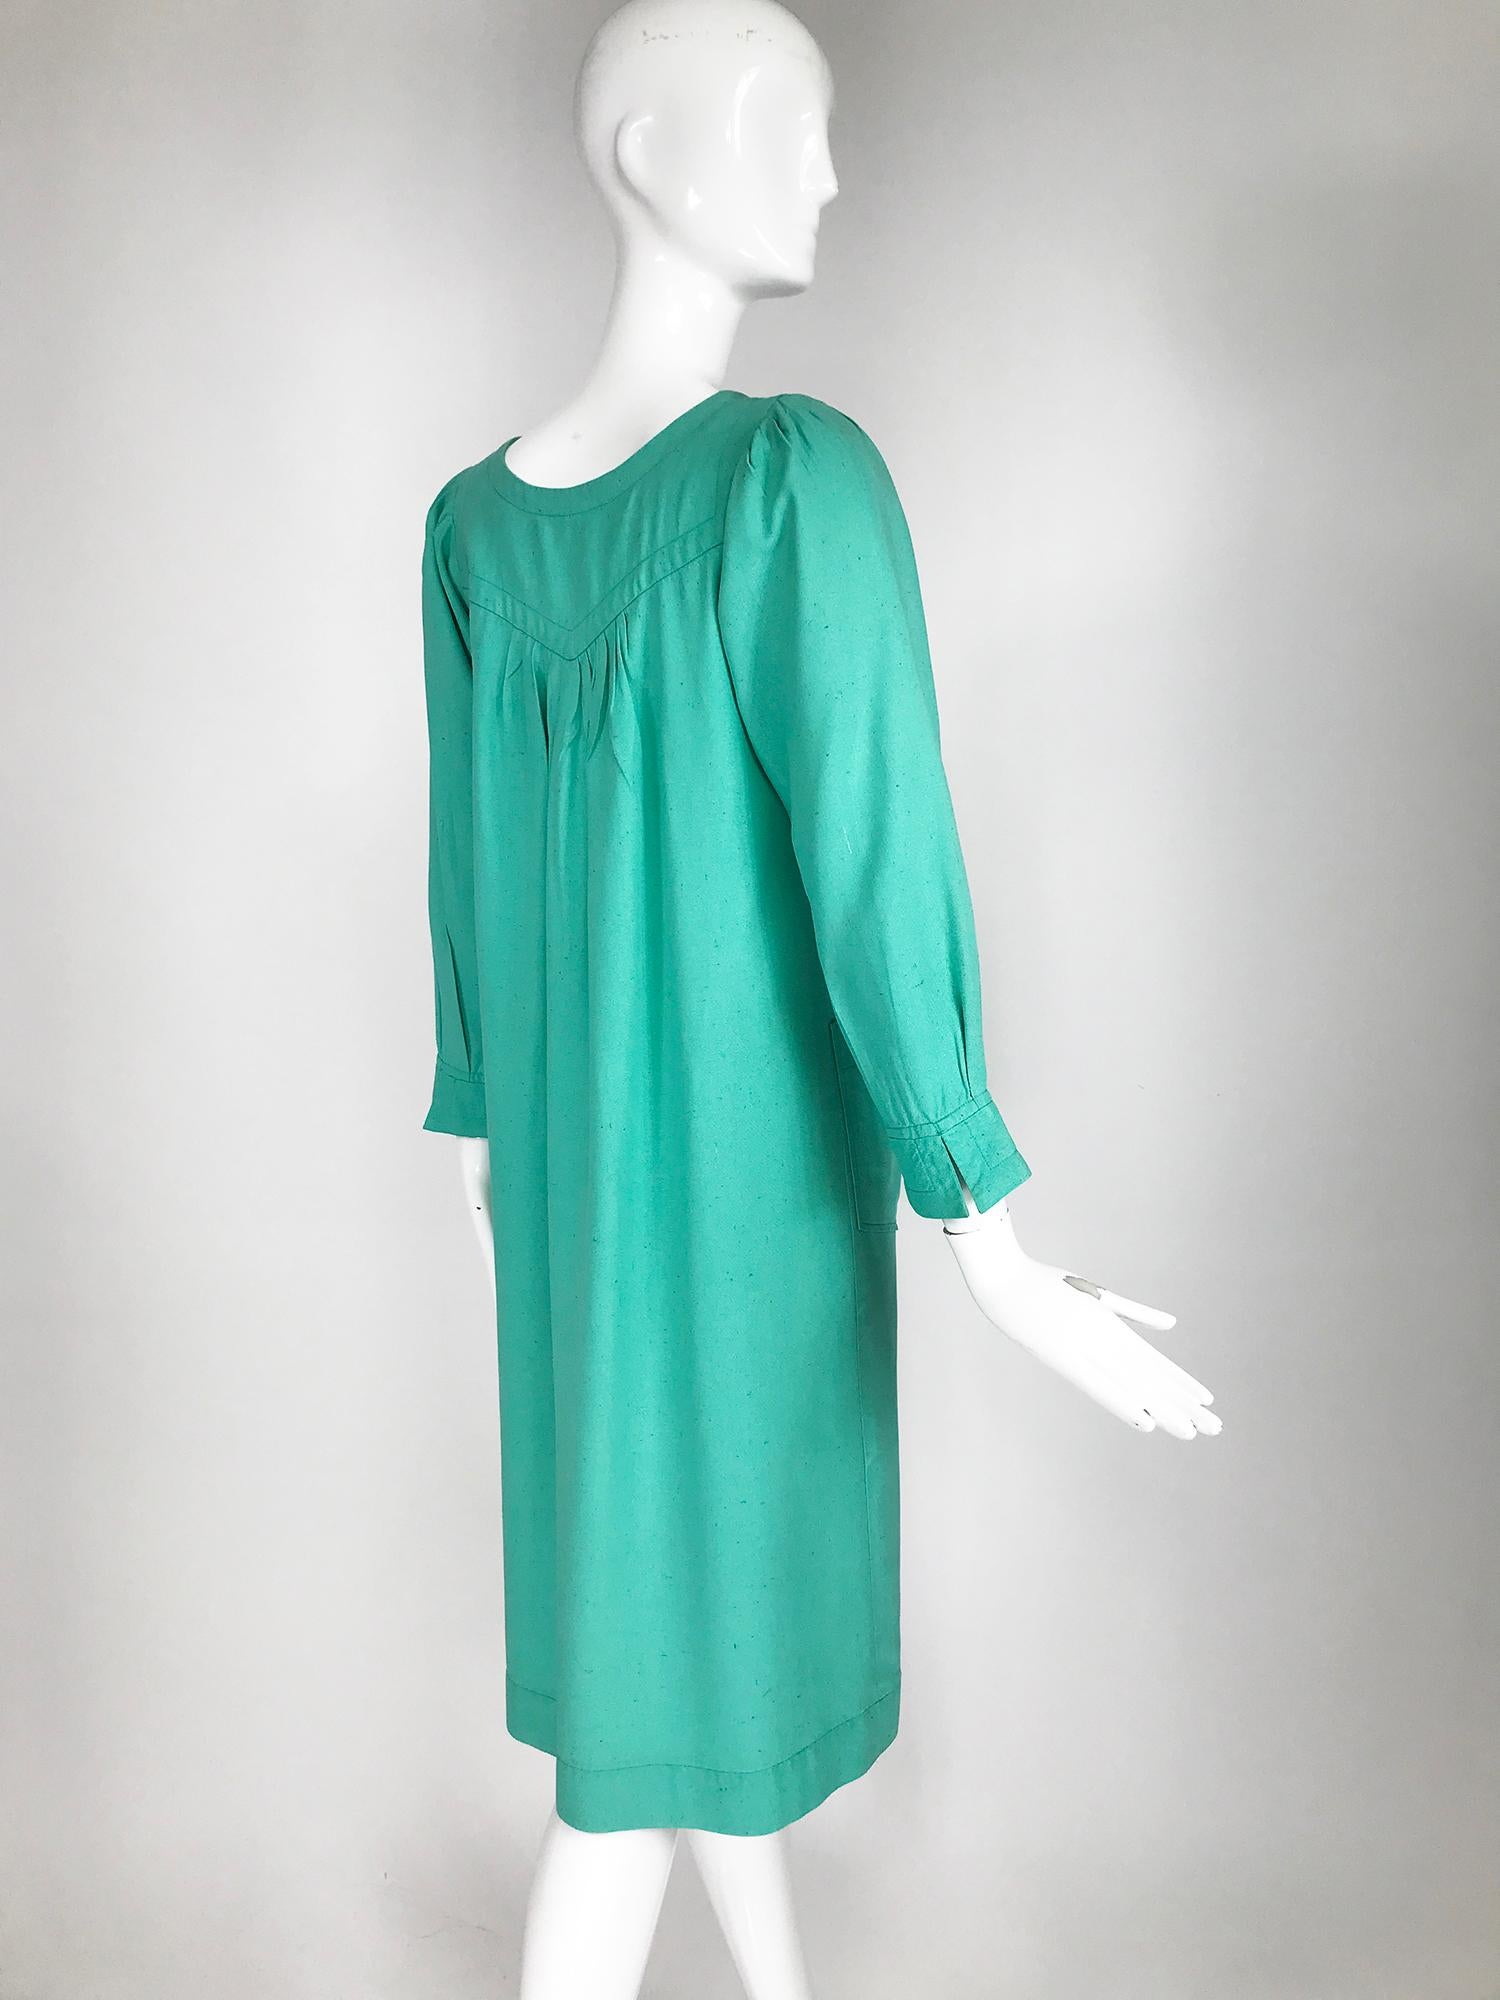 Yves Saint Laurent Rive Gauche Aqua Slub Silk Smock Dress 1970s In Good Condition In West Palm Beach, FL